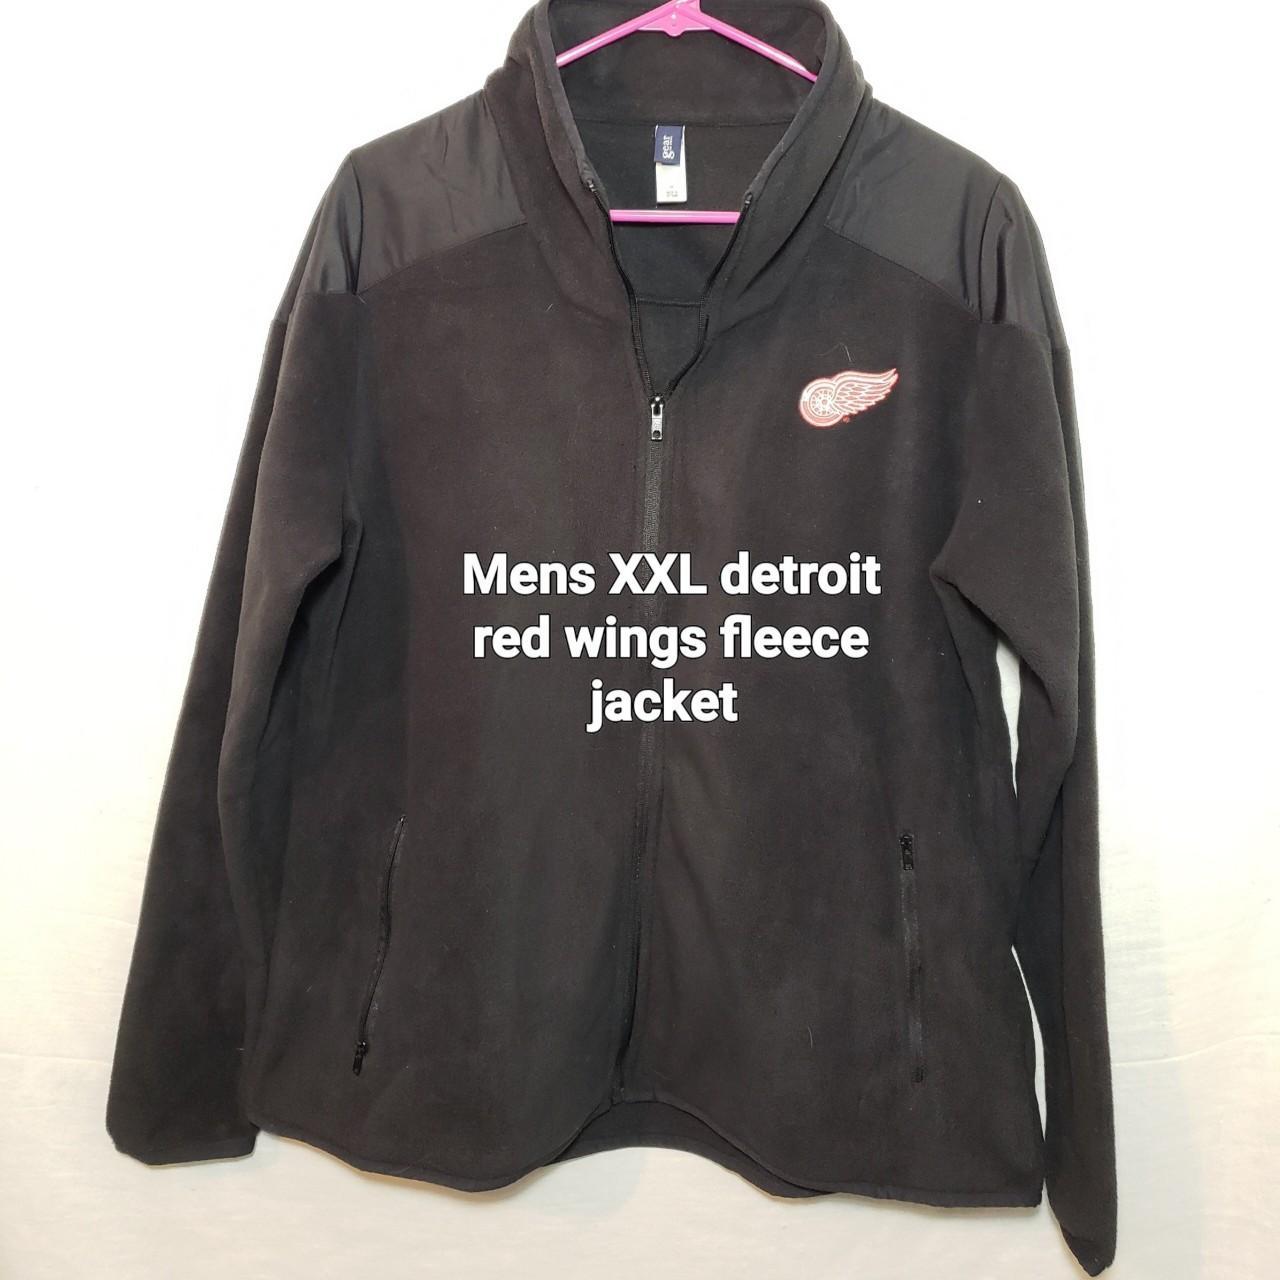 Product Image 2 - Men's Detroit Red Wings fleece